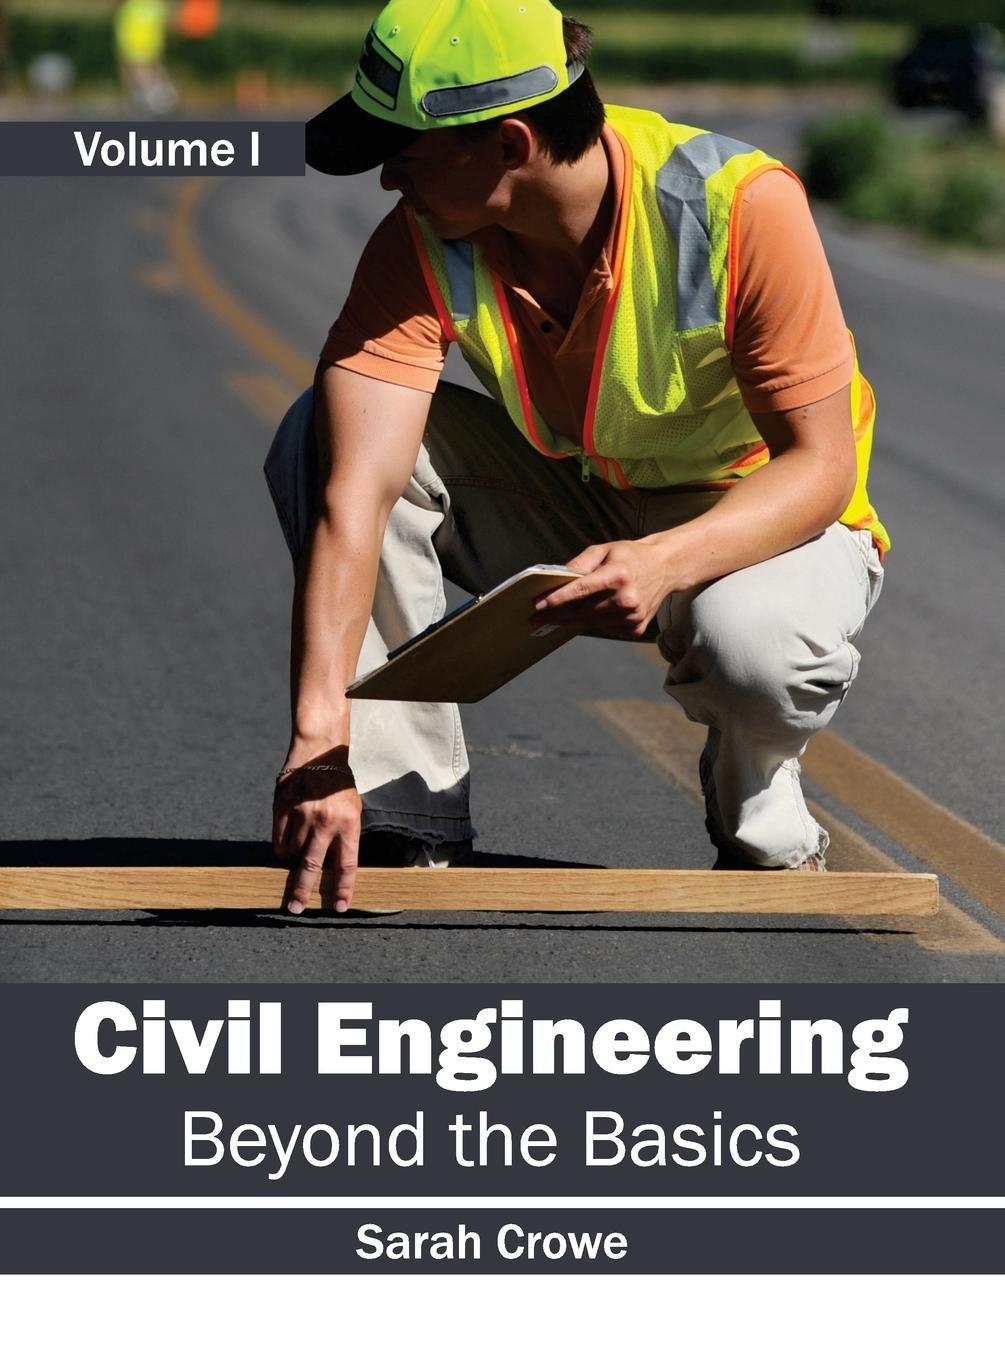 civil engineering beyond the basics vol 1 1st edition sarah crowe 632401037, 978-1632401038